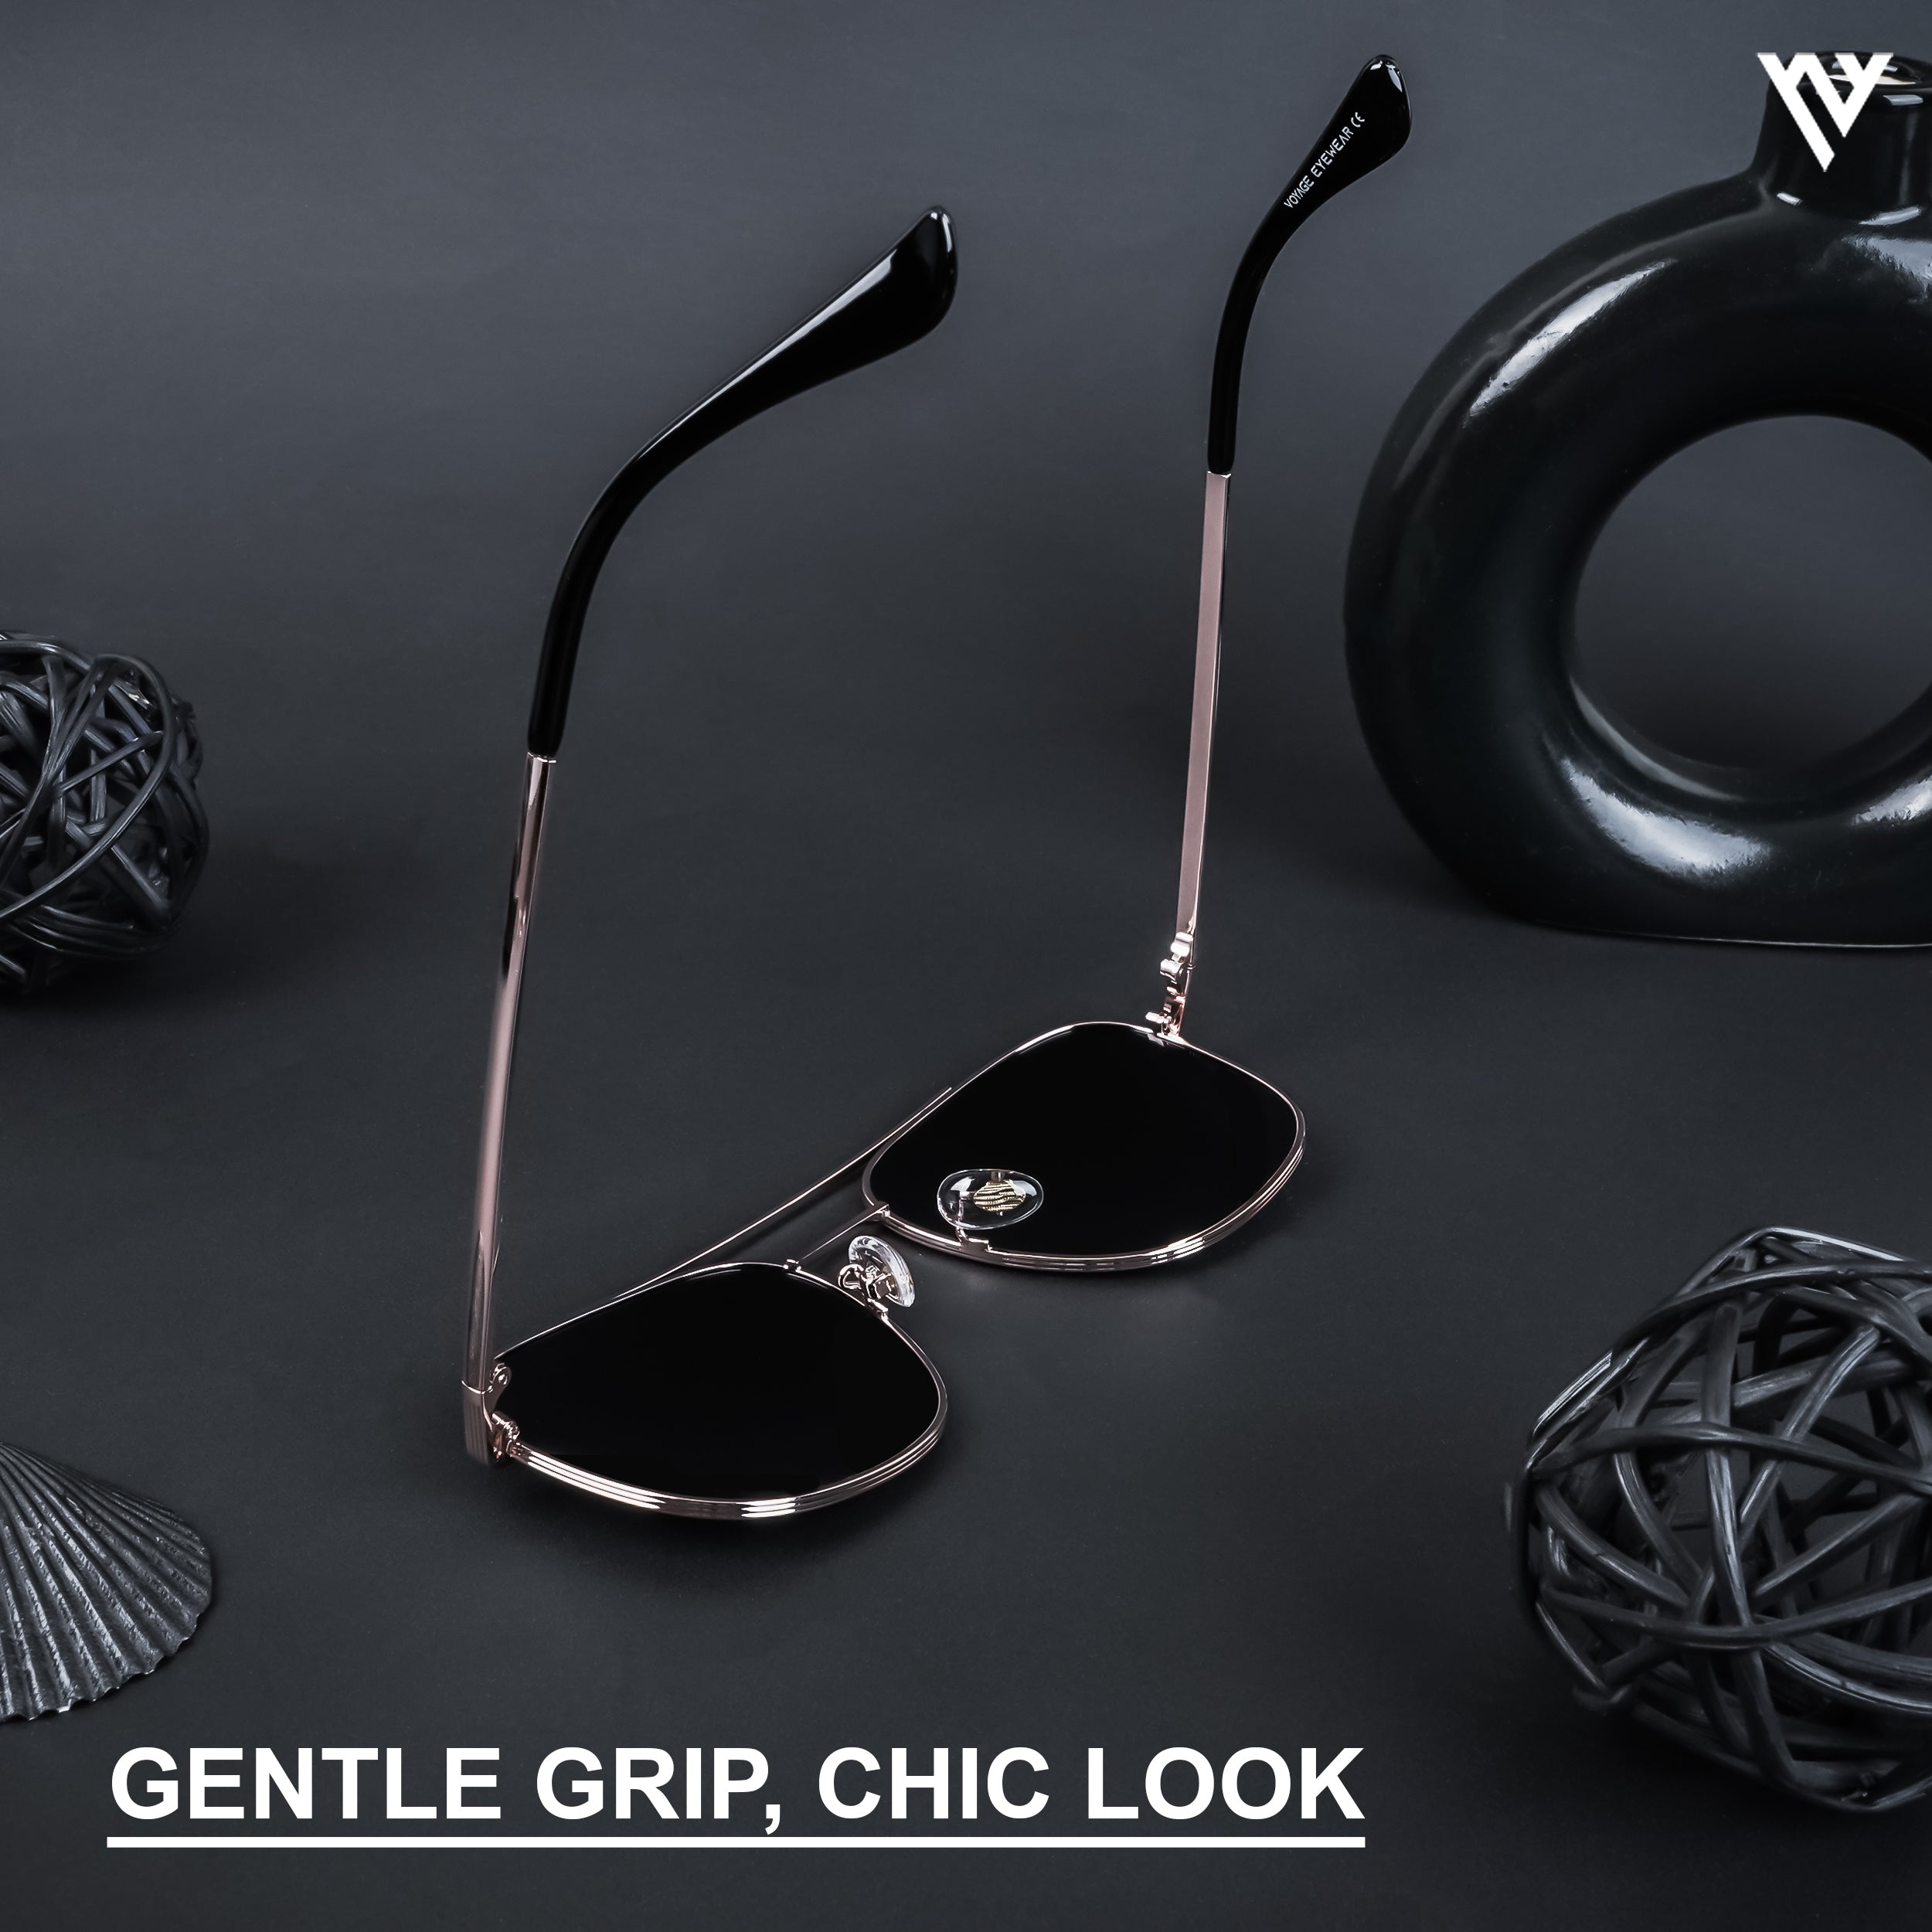 Voyage Exclusive Black Polarized Wayfarer Sunglasses for Men & Women - PMG4581